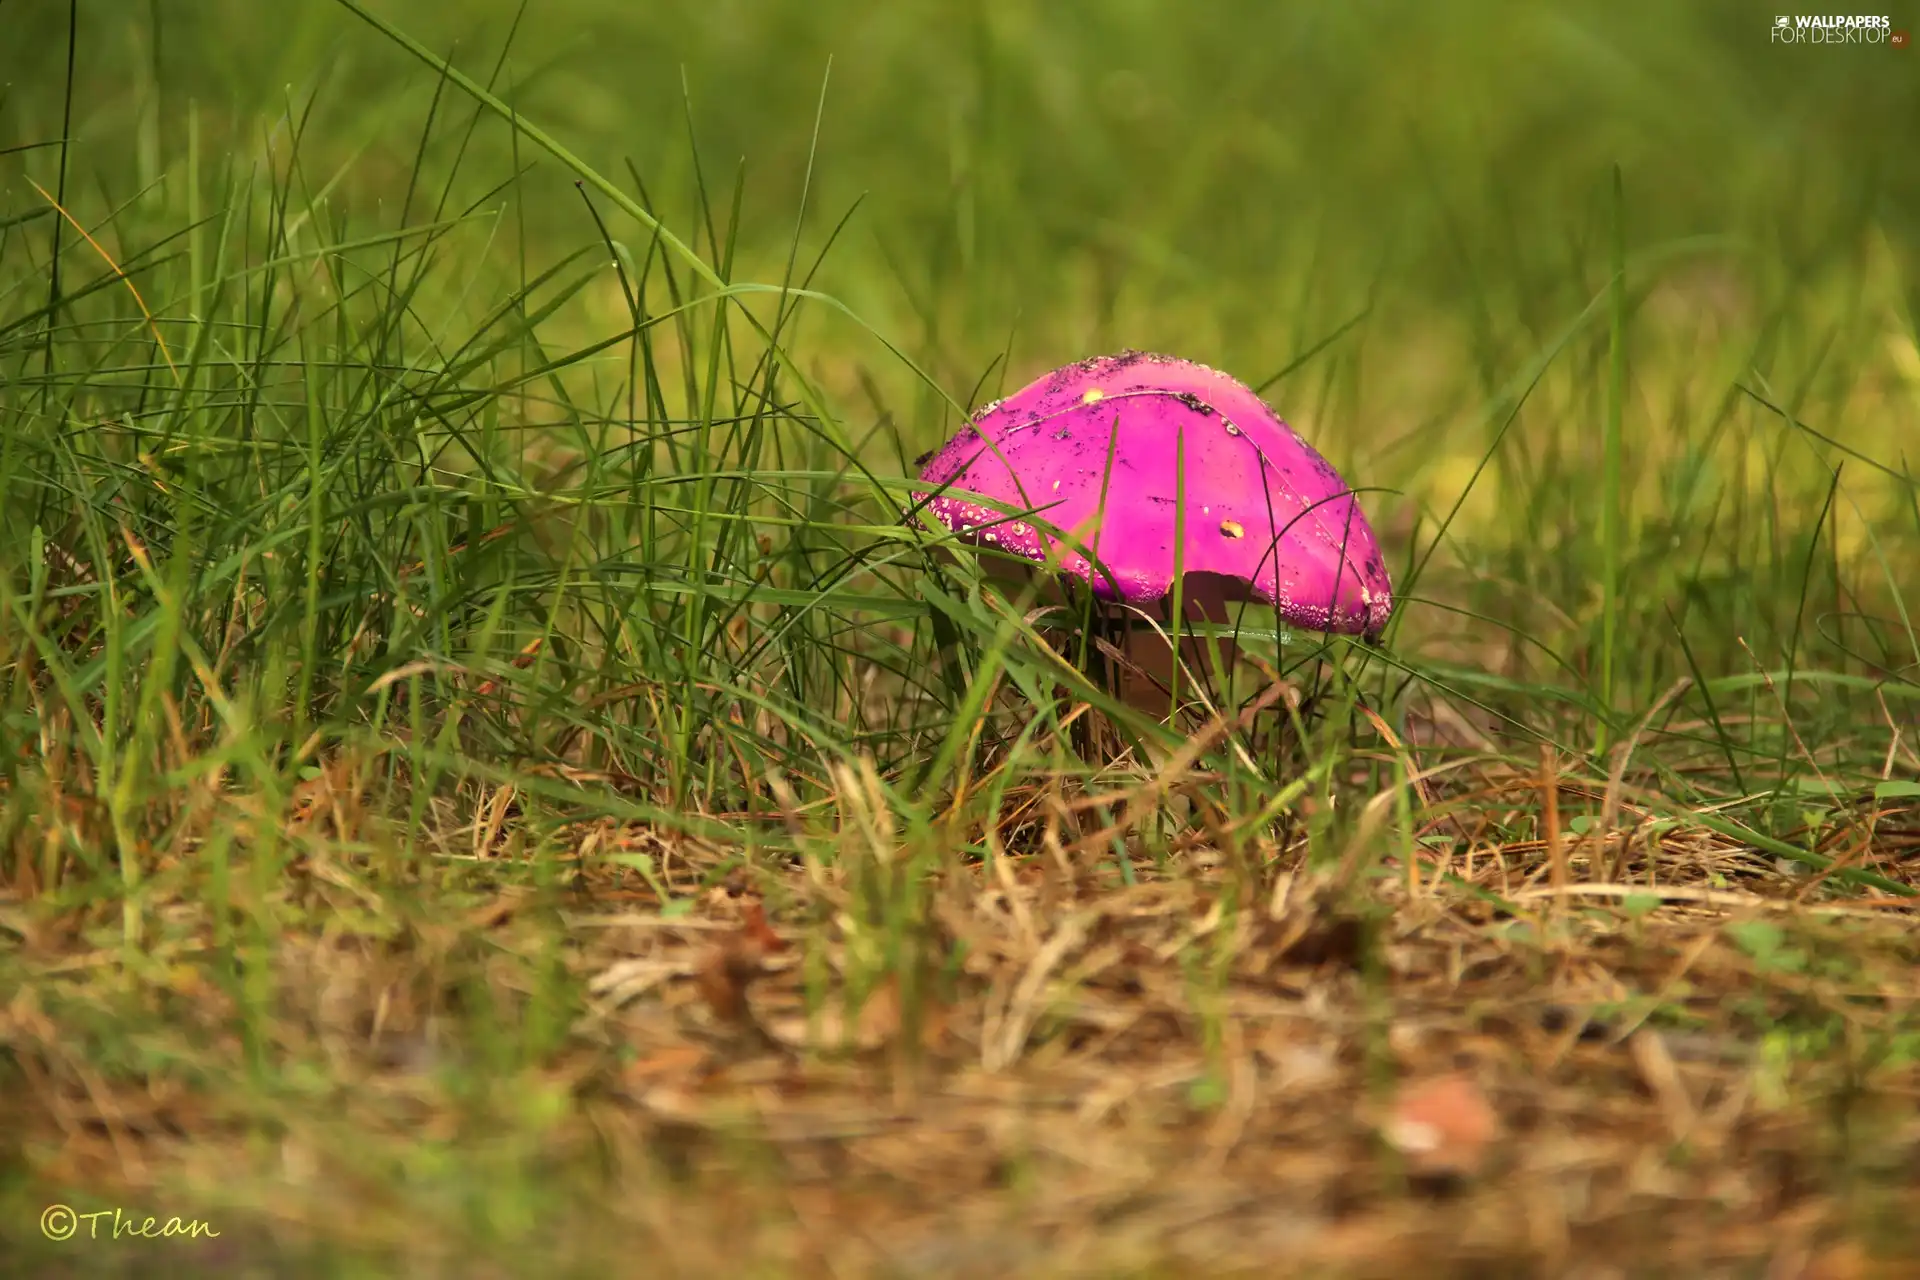 Pink, Mushrooms, grass, toadstool